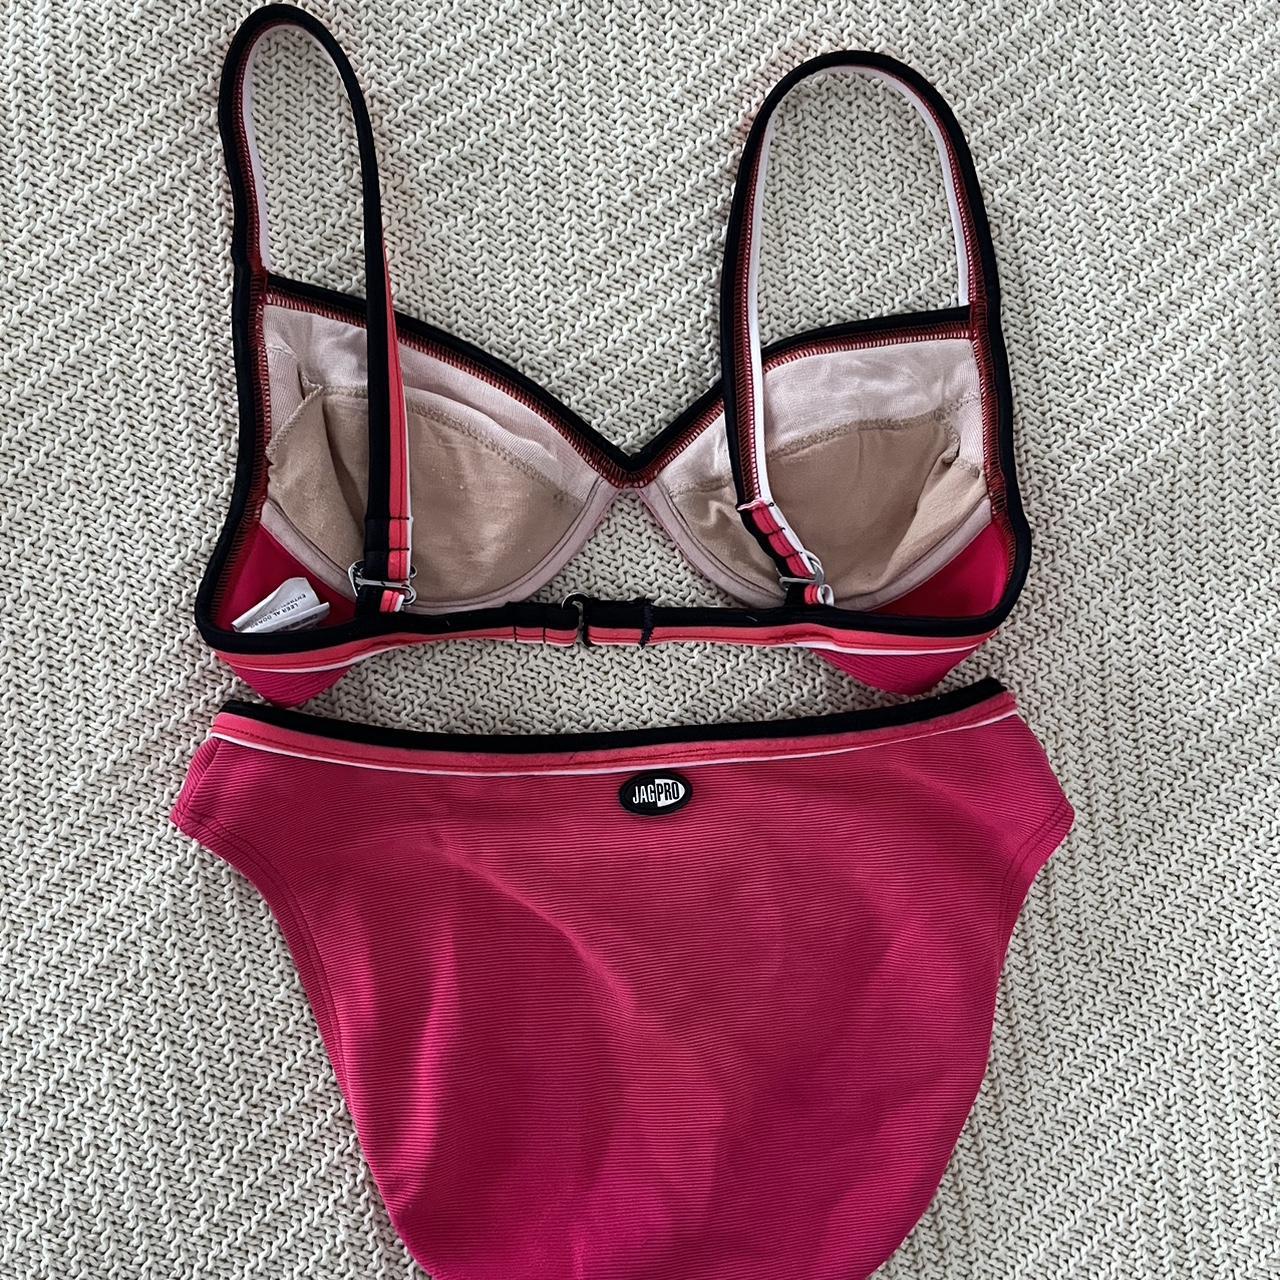 JAG Women's Pink and Navy Bikinis-and-tankini-sets (4)